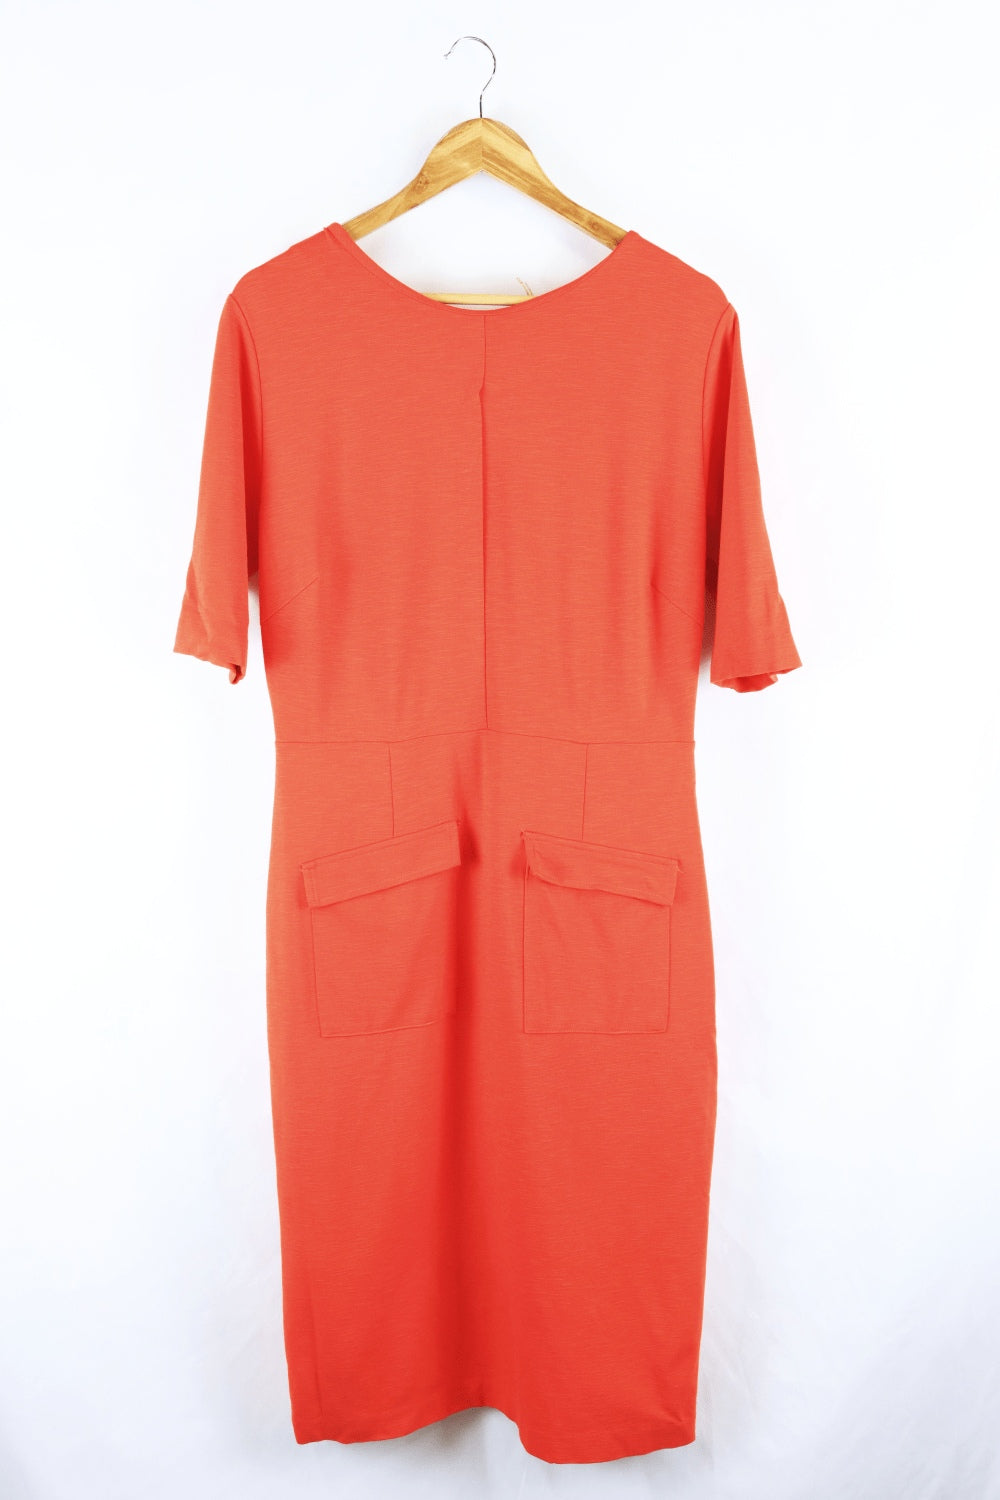 Oxford Orange Dress 14